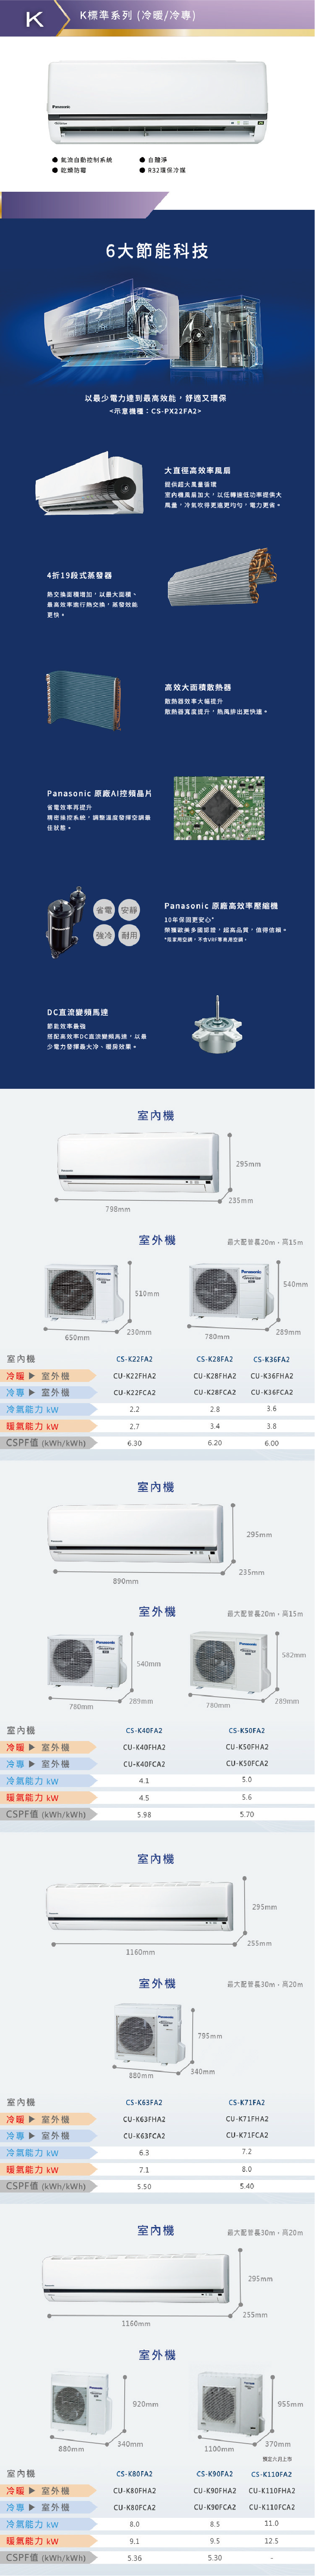 CU-K28FCA2 4.5坪適用 K系列 一對一 分離式 變頻 冷專 冷氣 CS-K28FA2